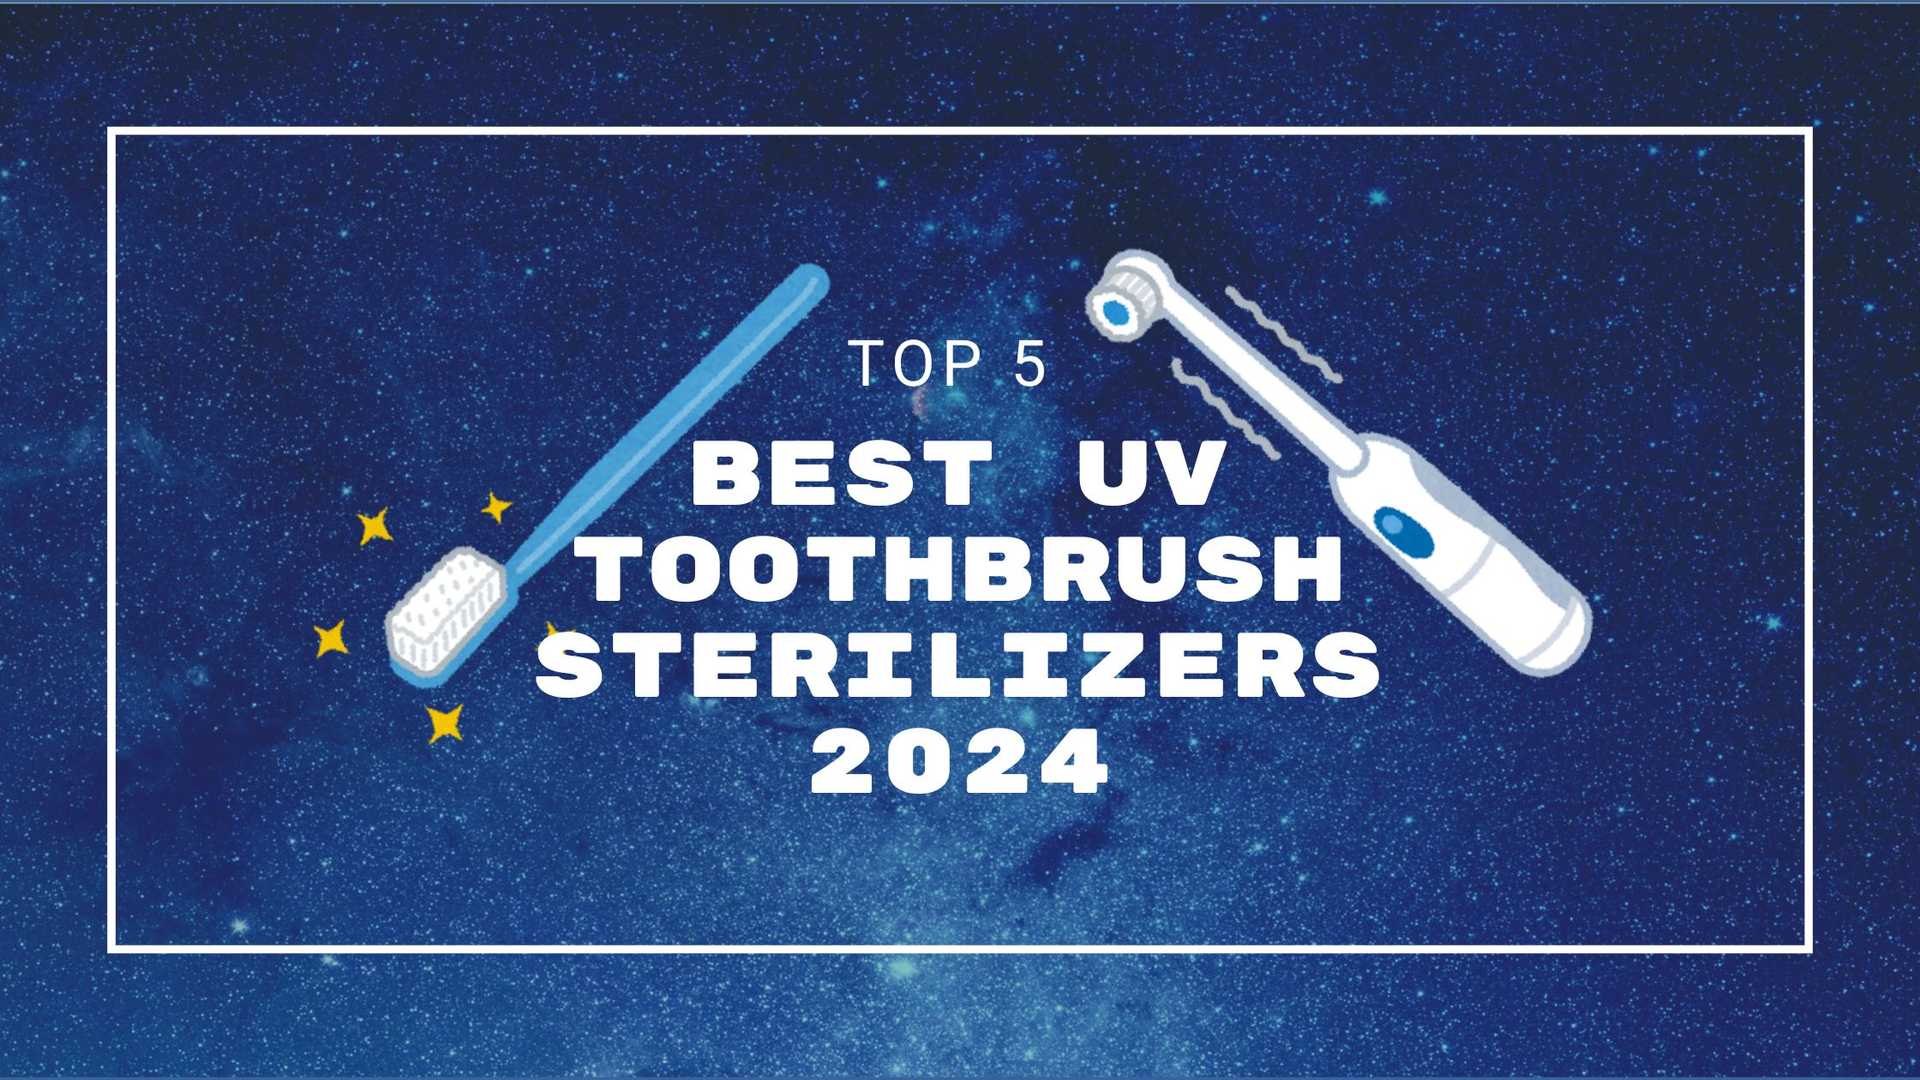 Top 5 Best UV Toothbrush Sterilizers in 2024